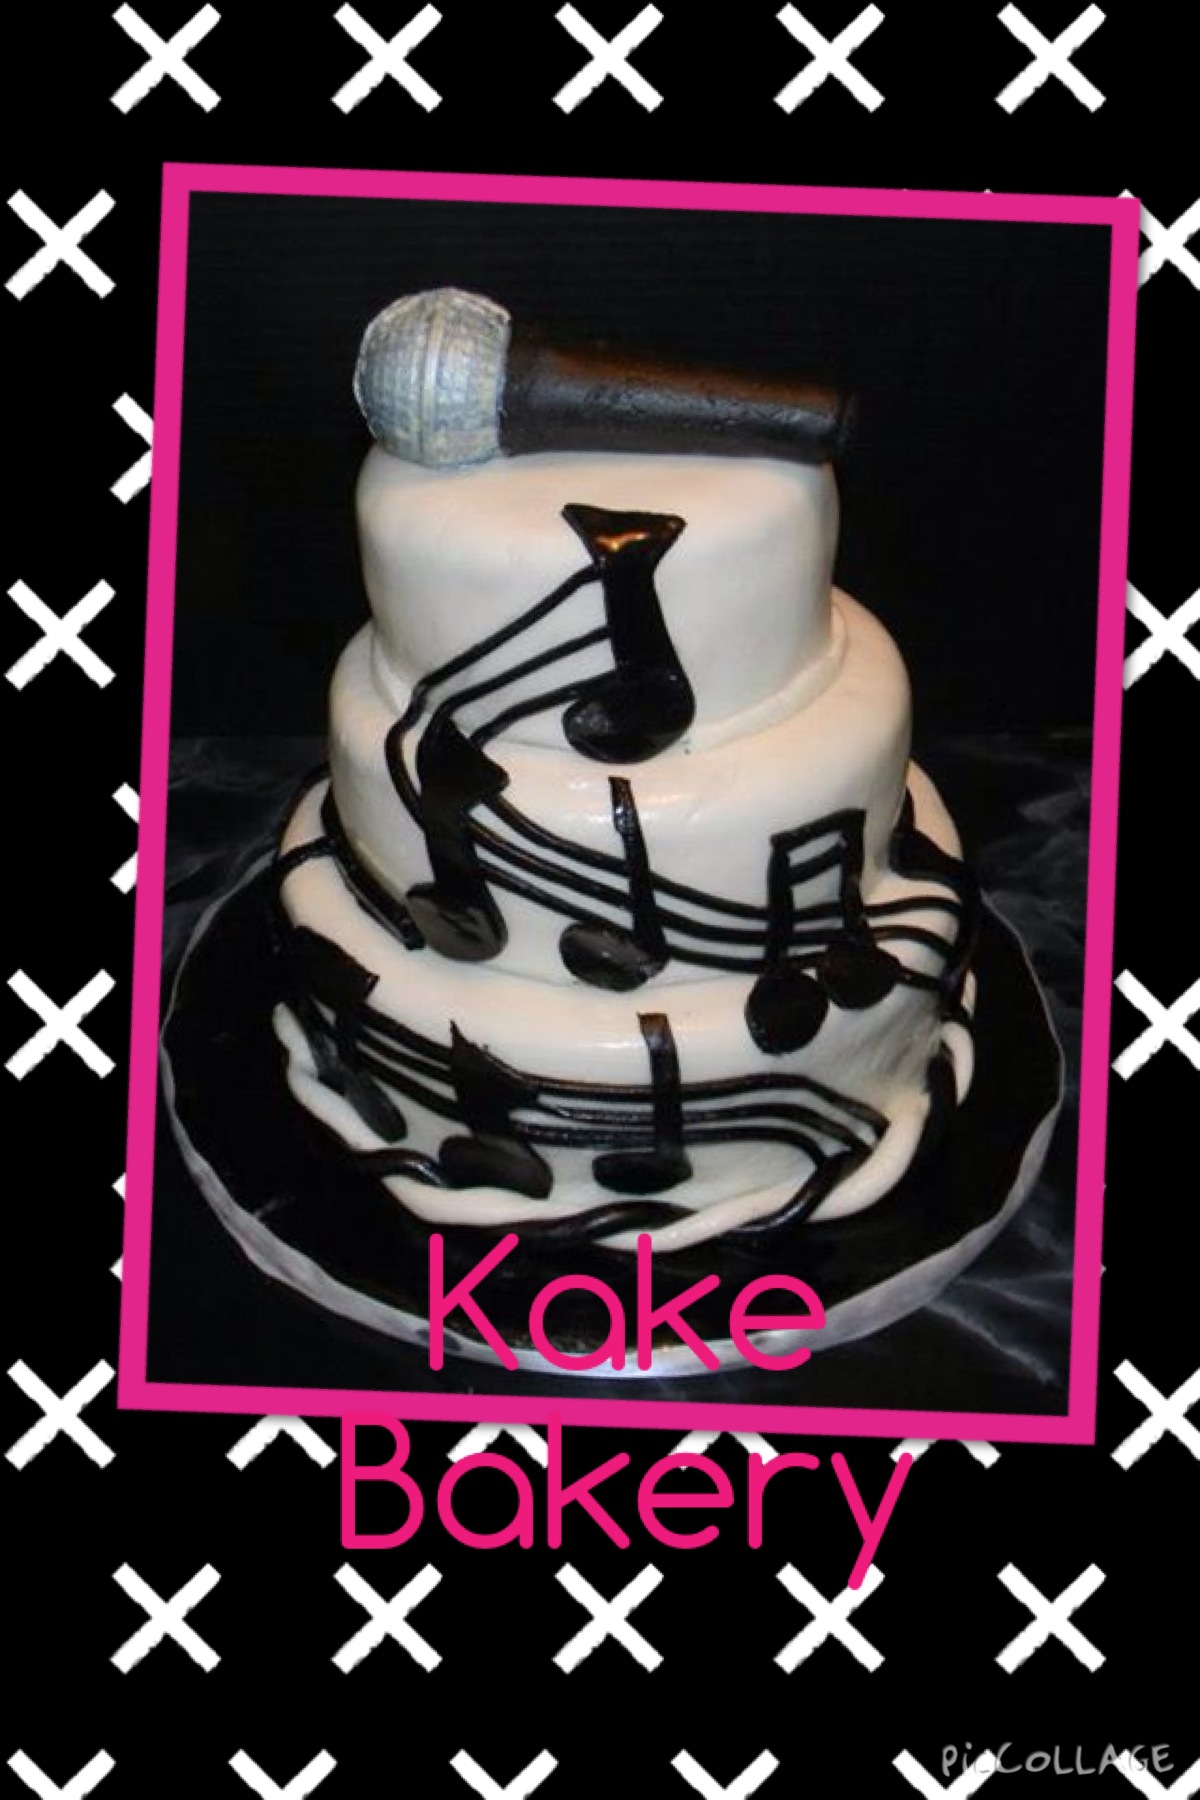 Music Inspired Cake